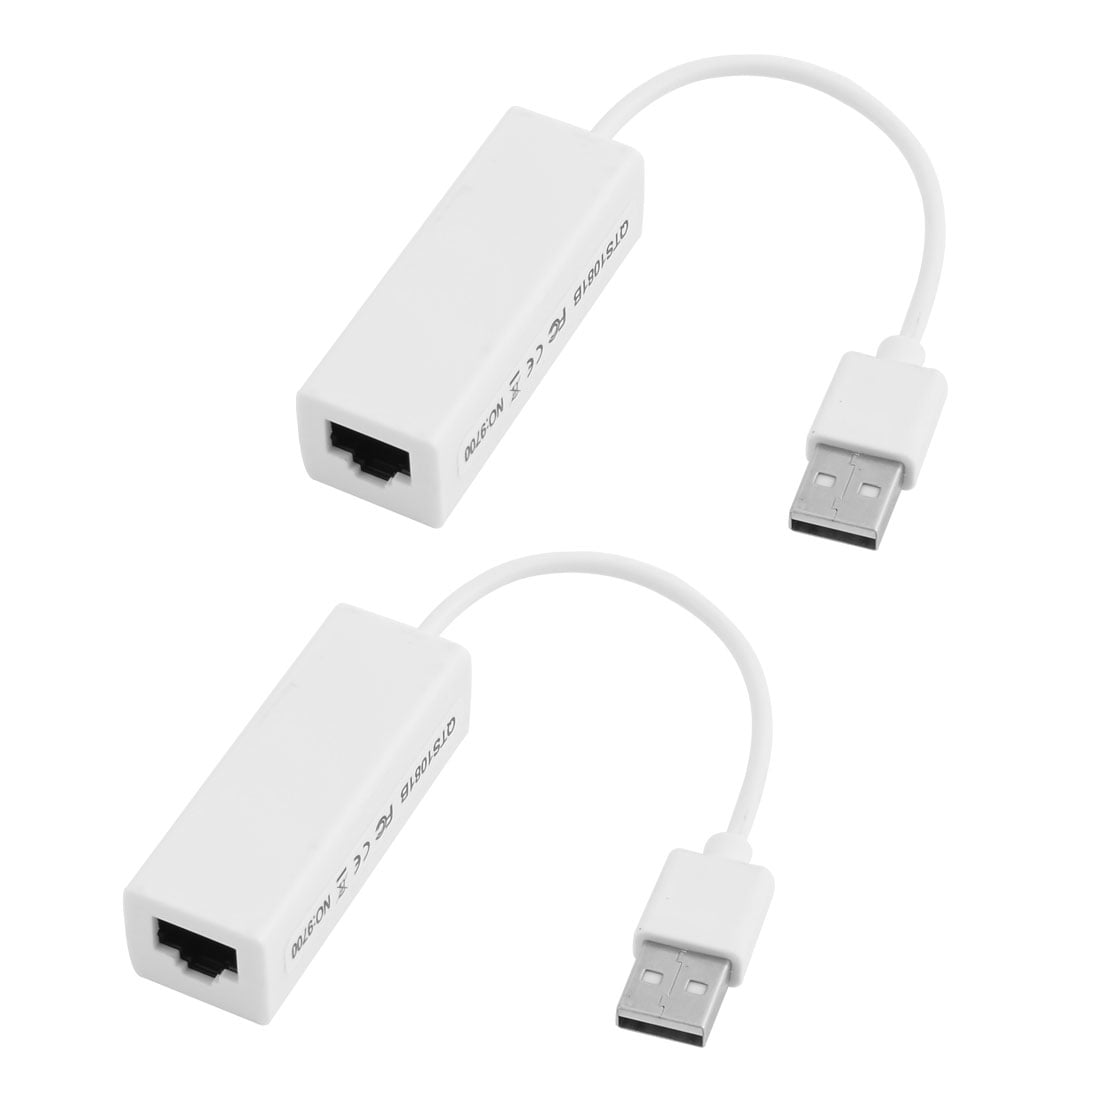 Linksys USB Ethernet Adapter USB3GIG - Twisted Pair RJ-45 Renewed - 1 x Network s - USB 3.0-1 Port 